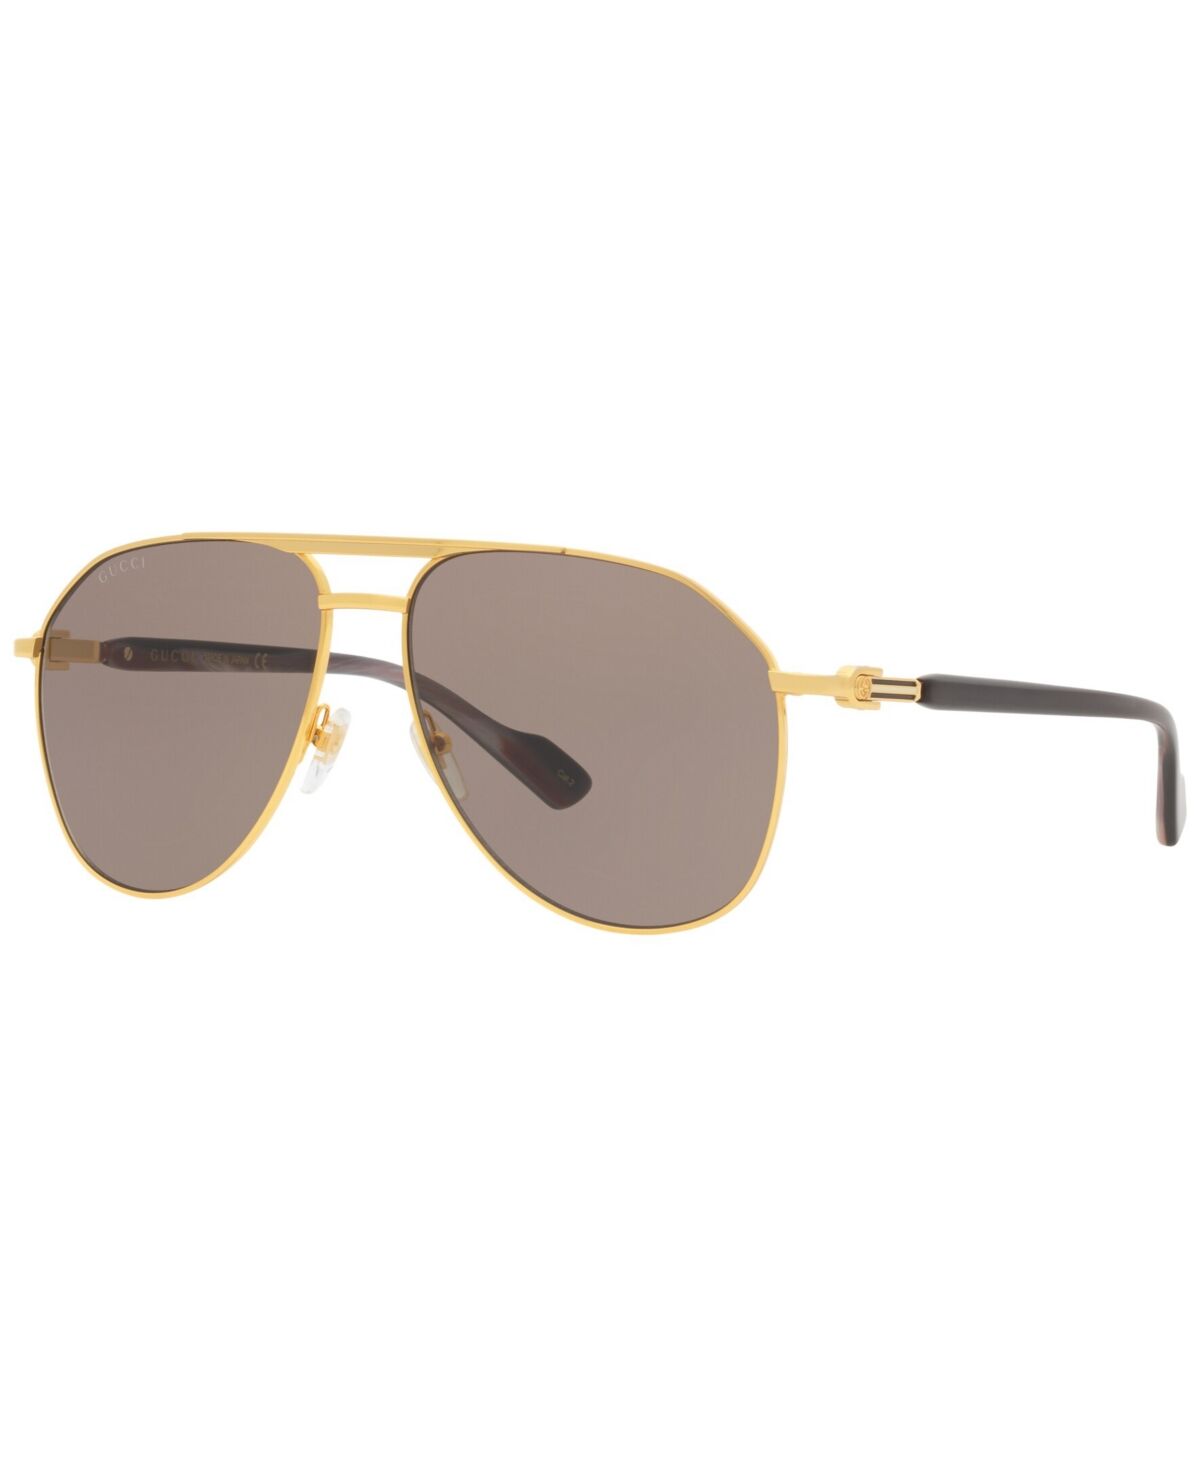 Gucci Men's Sunglasses, GC001938 - Gold-Tone Clear